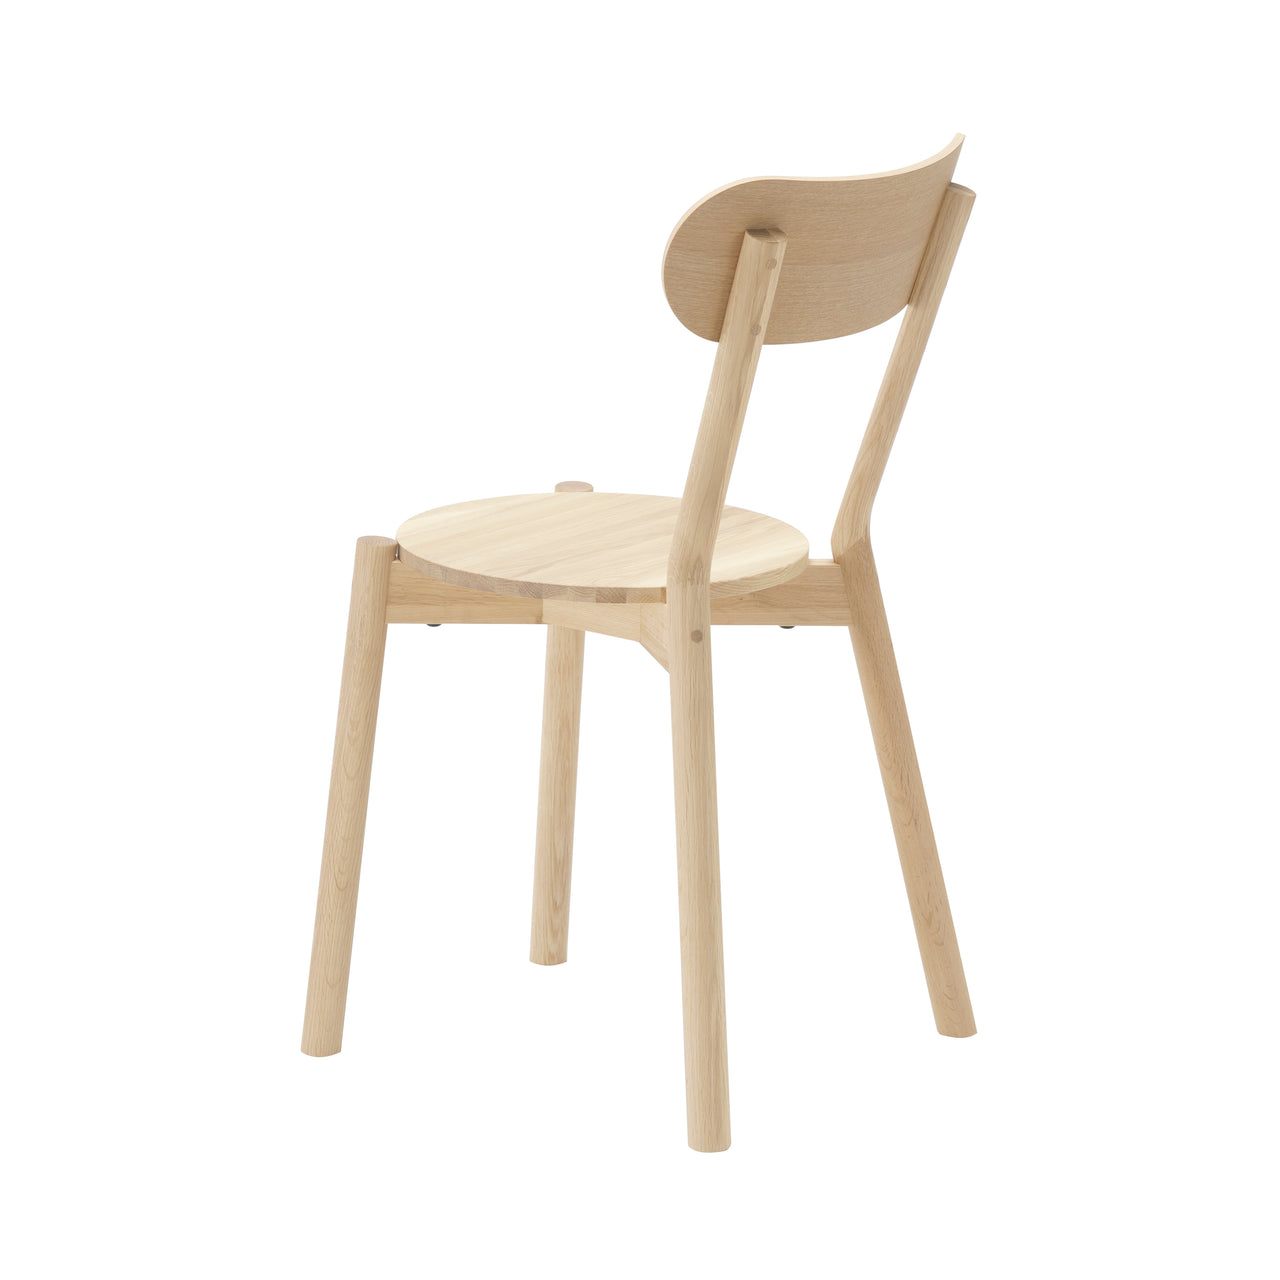 Castor Chair Stacking | Buy Karimoku New Standard online at A+R